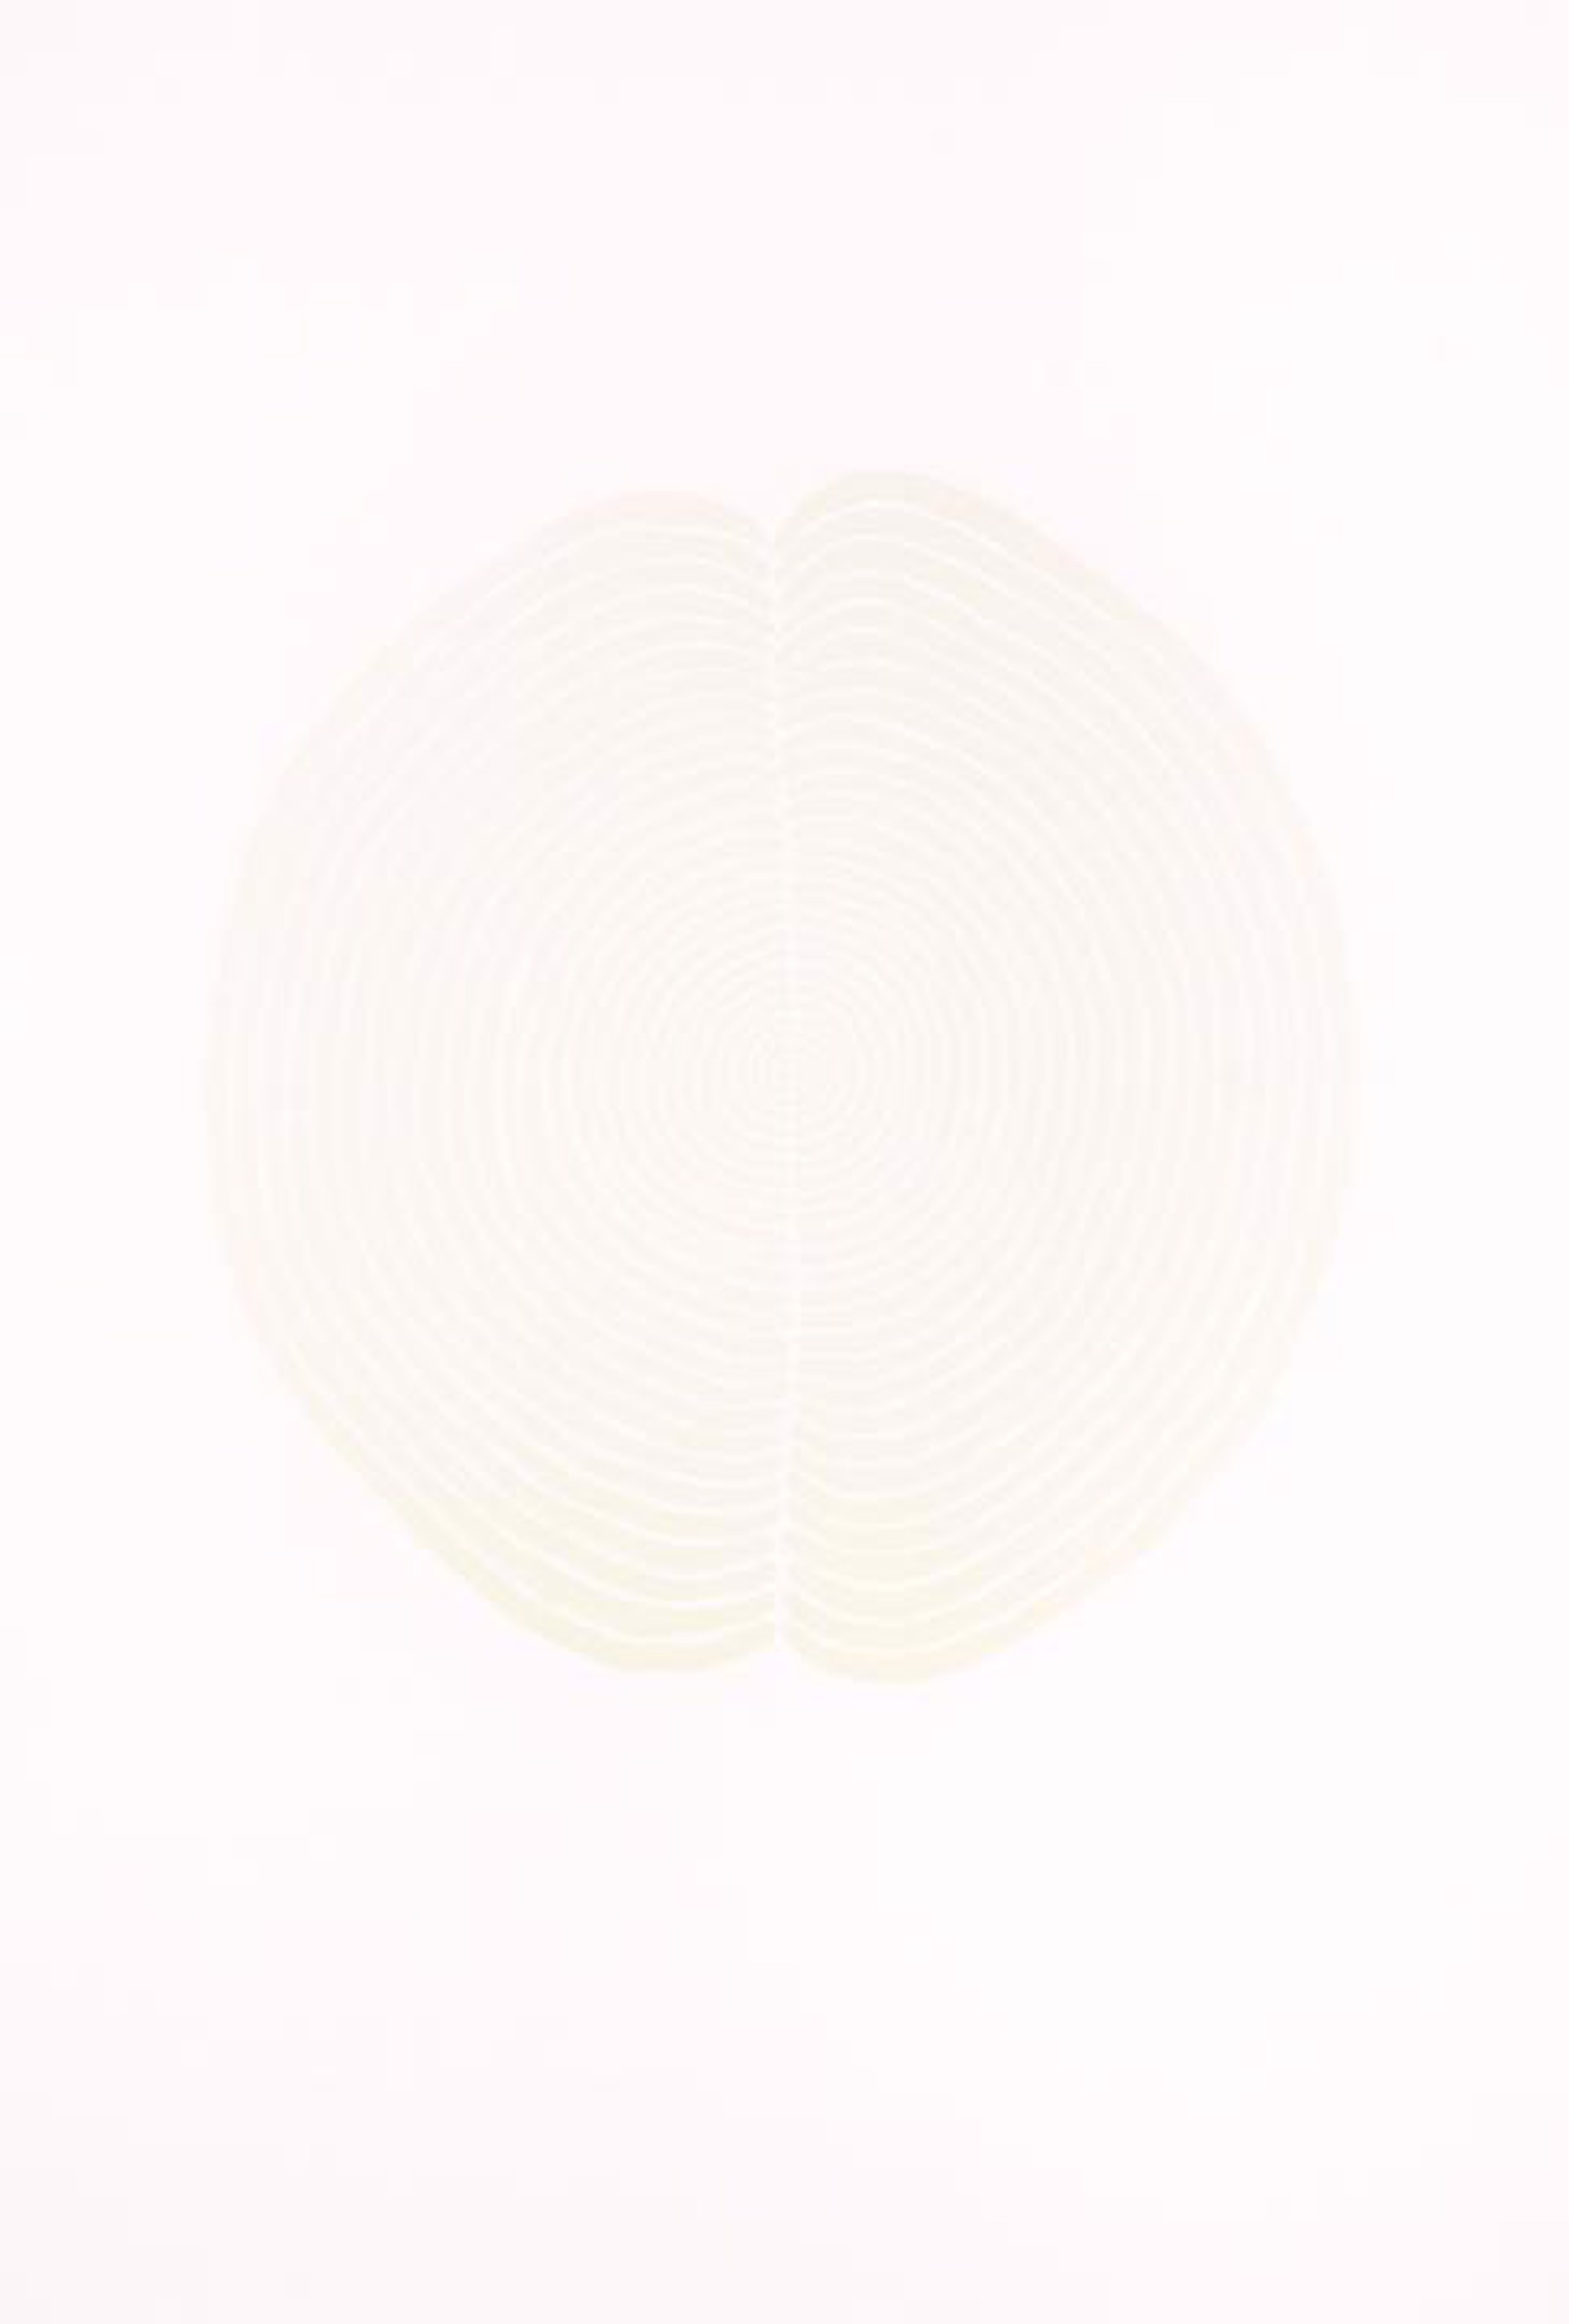 Brain Field by Antony Gormley